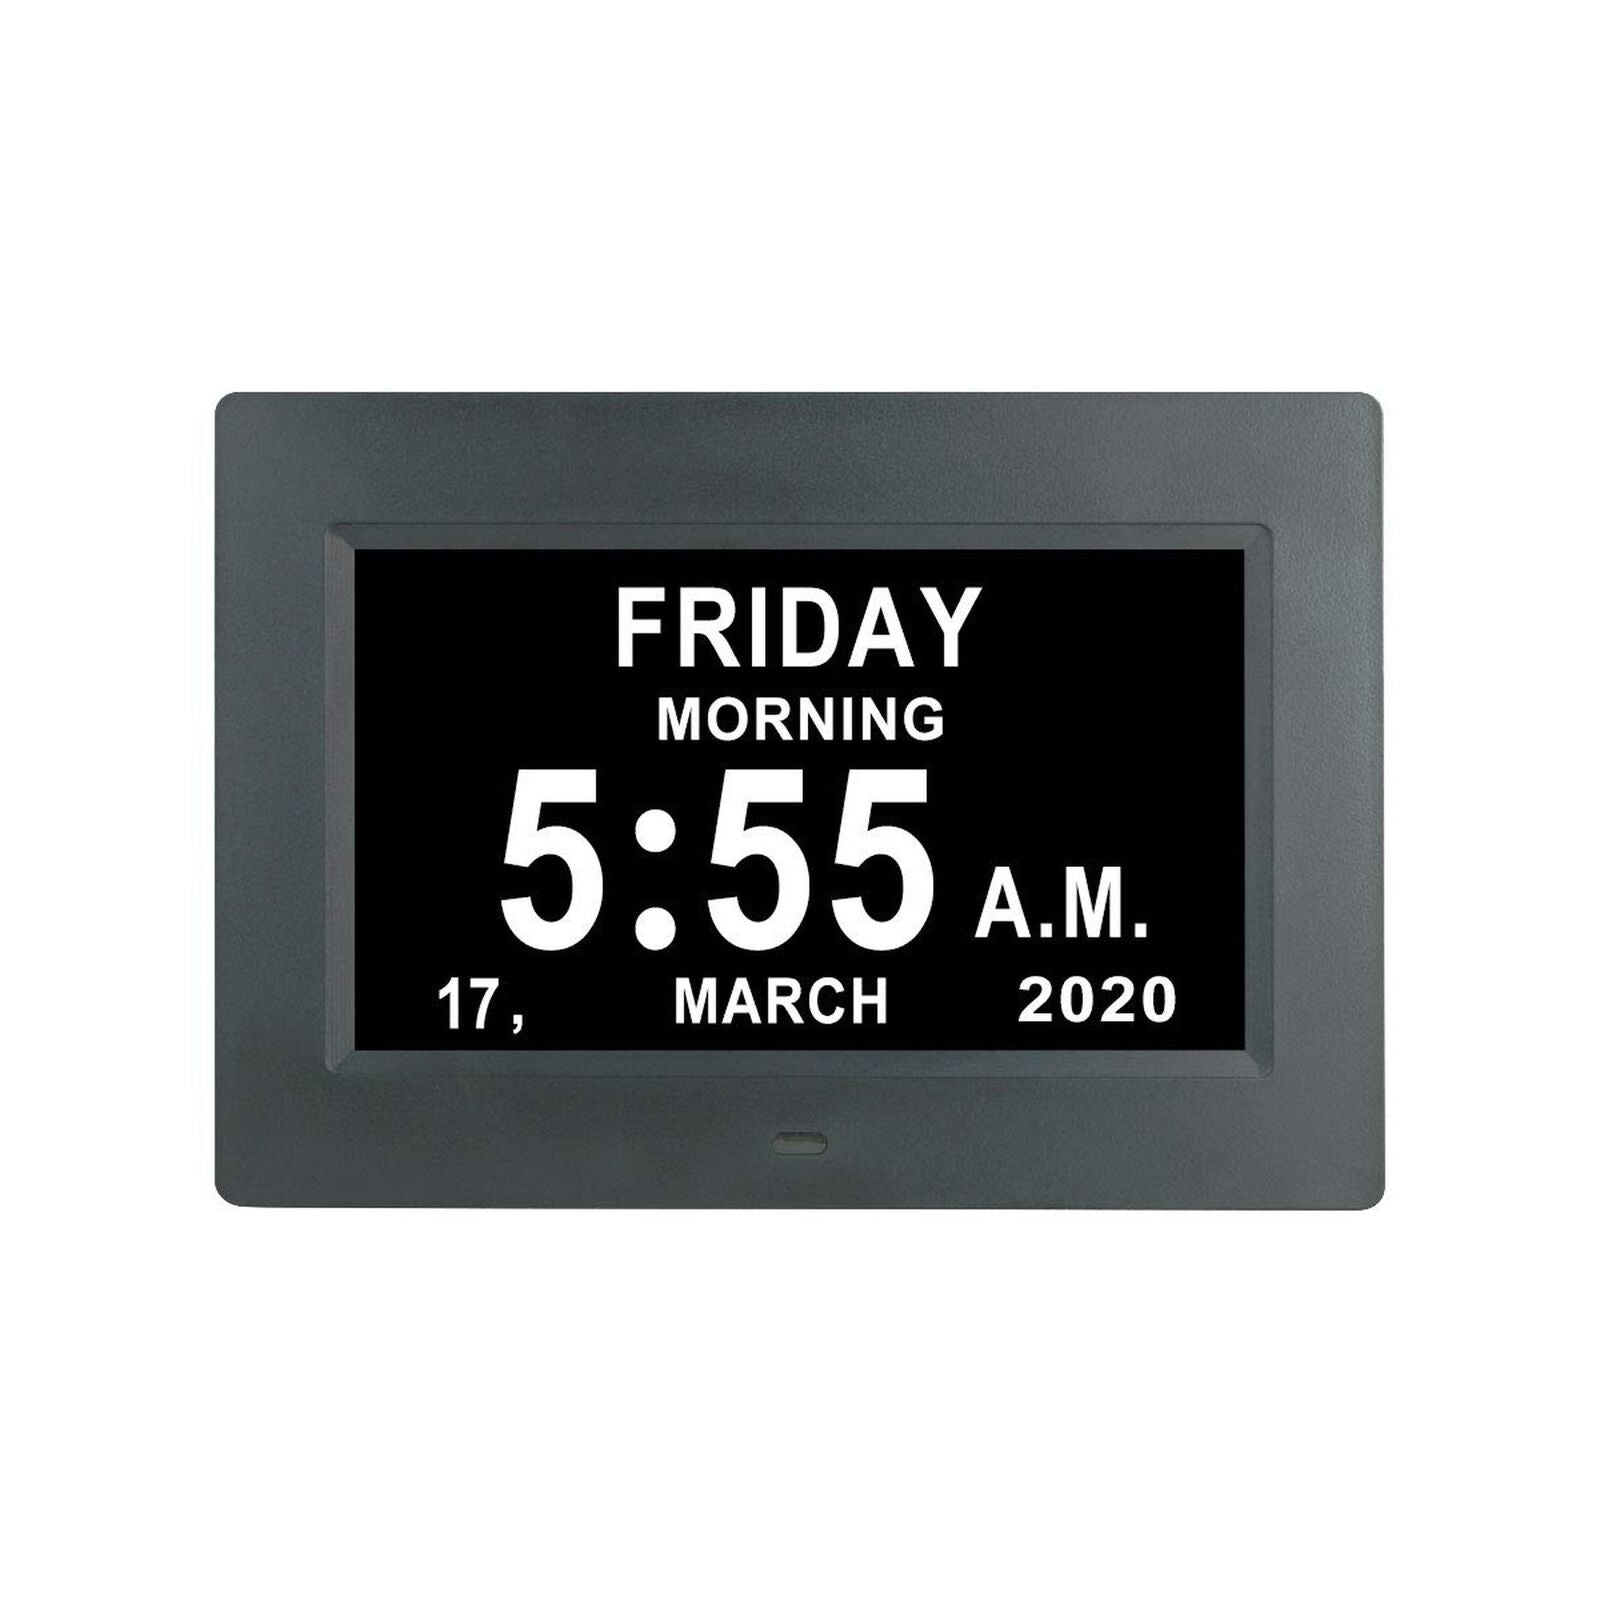 7-inch LED calendar clock